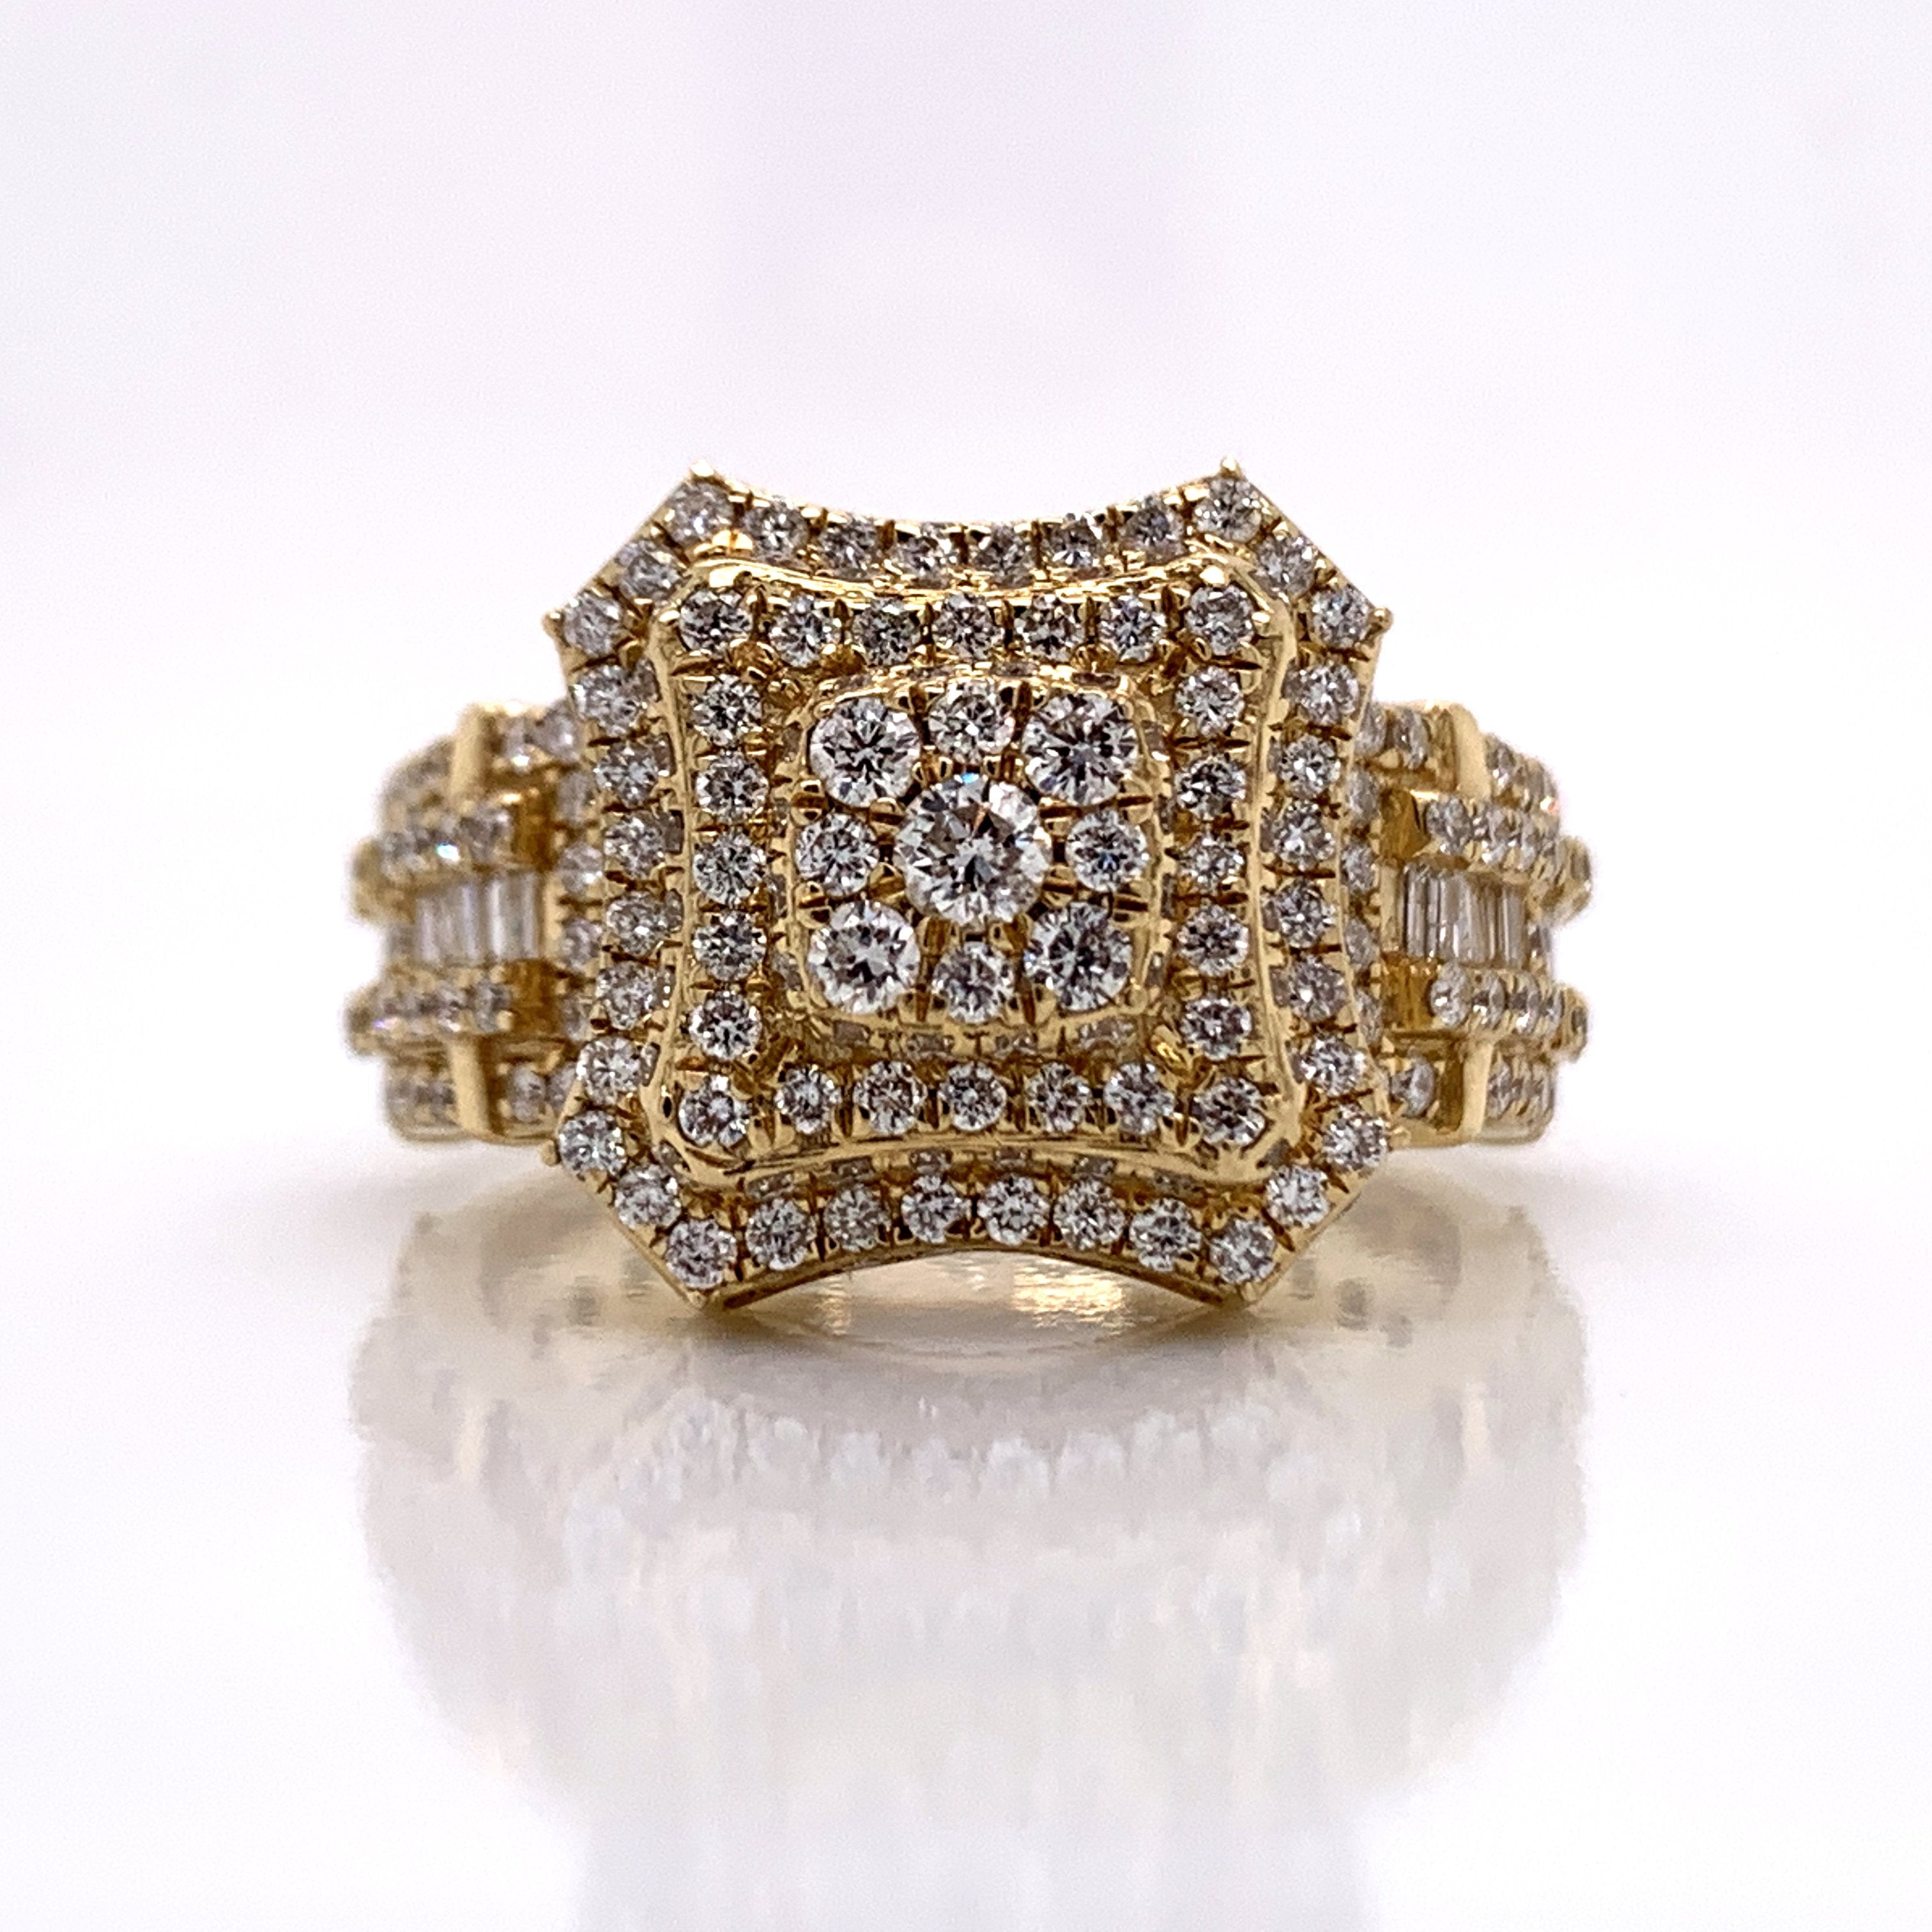 2.26CT Diamond Ring in 10K Gold - White Carat Diamonds 